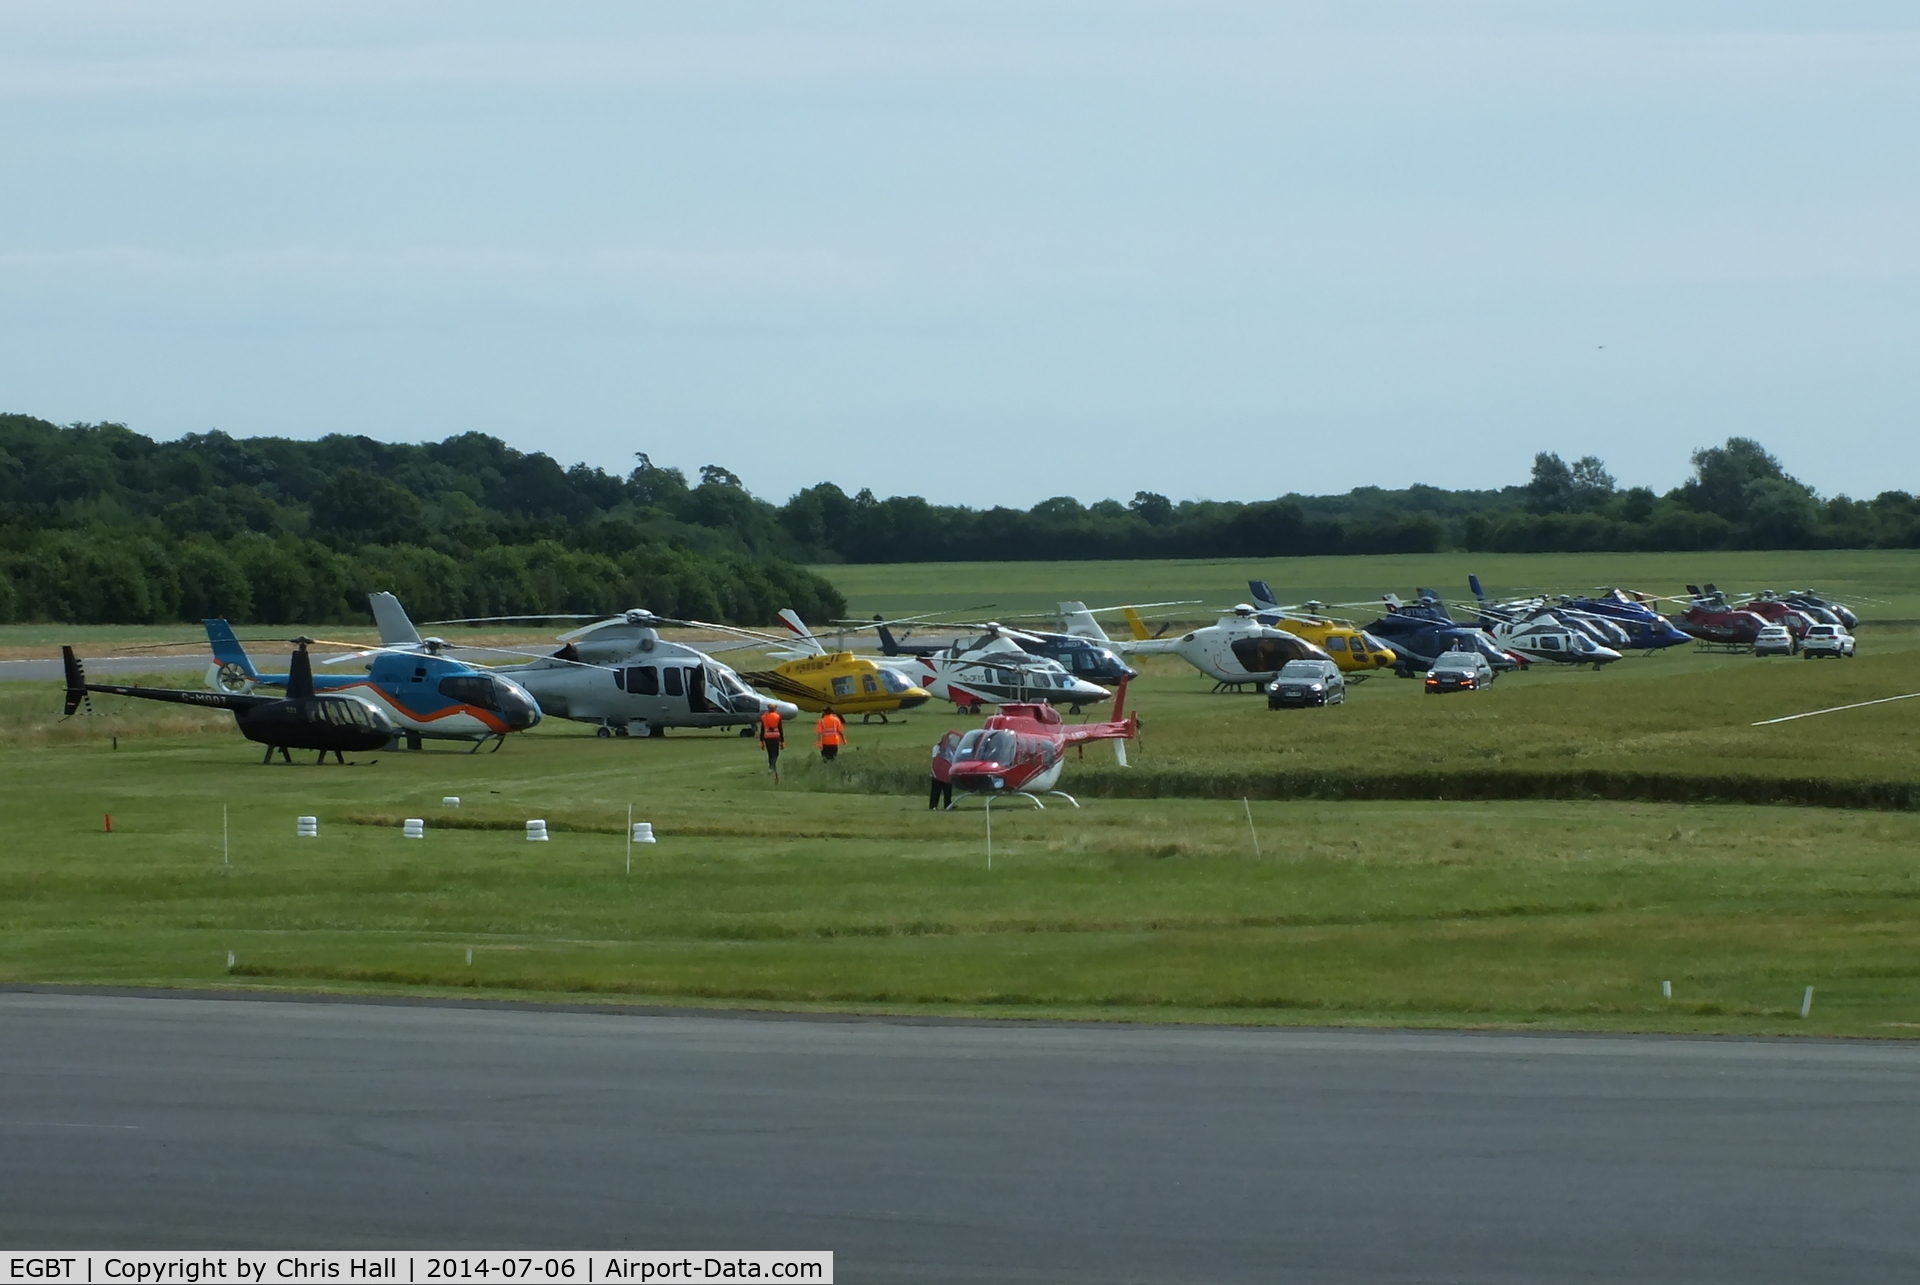 Turweston Aerodrome Airport, Turweston, England United Kingdom (EGBT) - British F1 Grand Prix day at Turweston